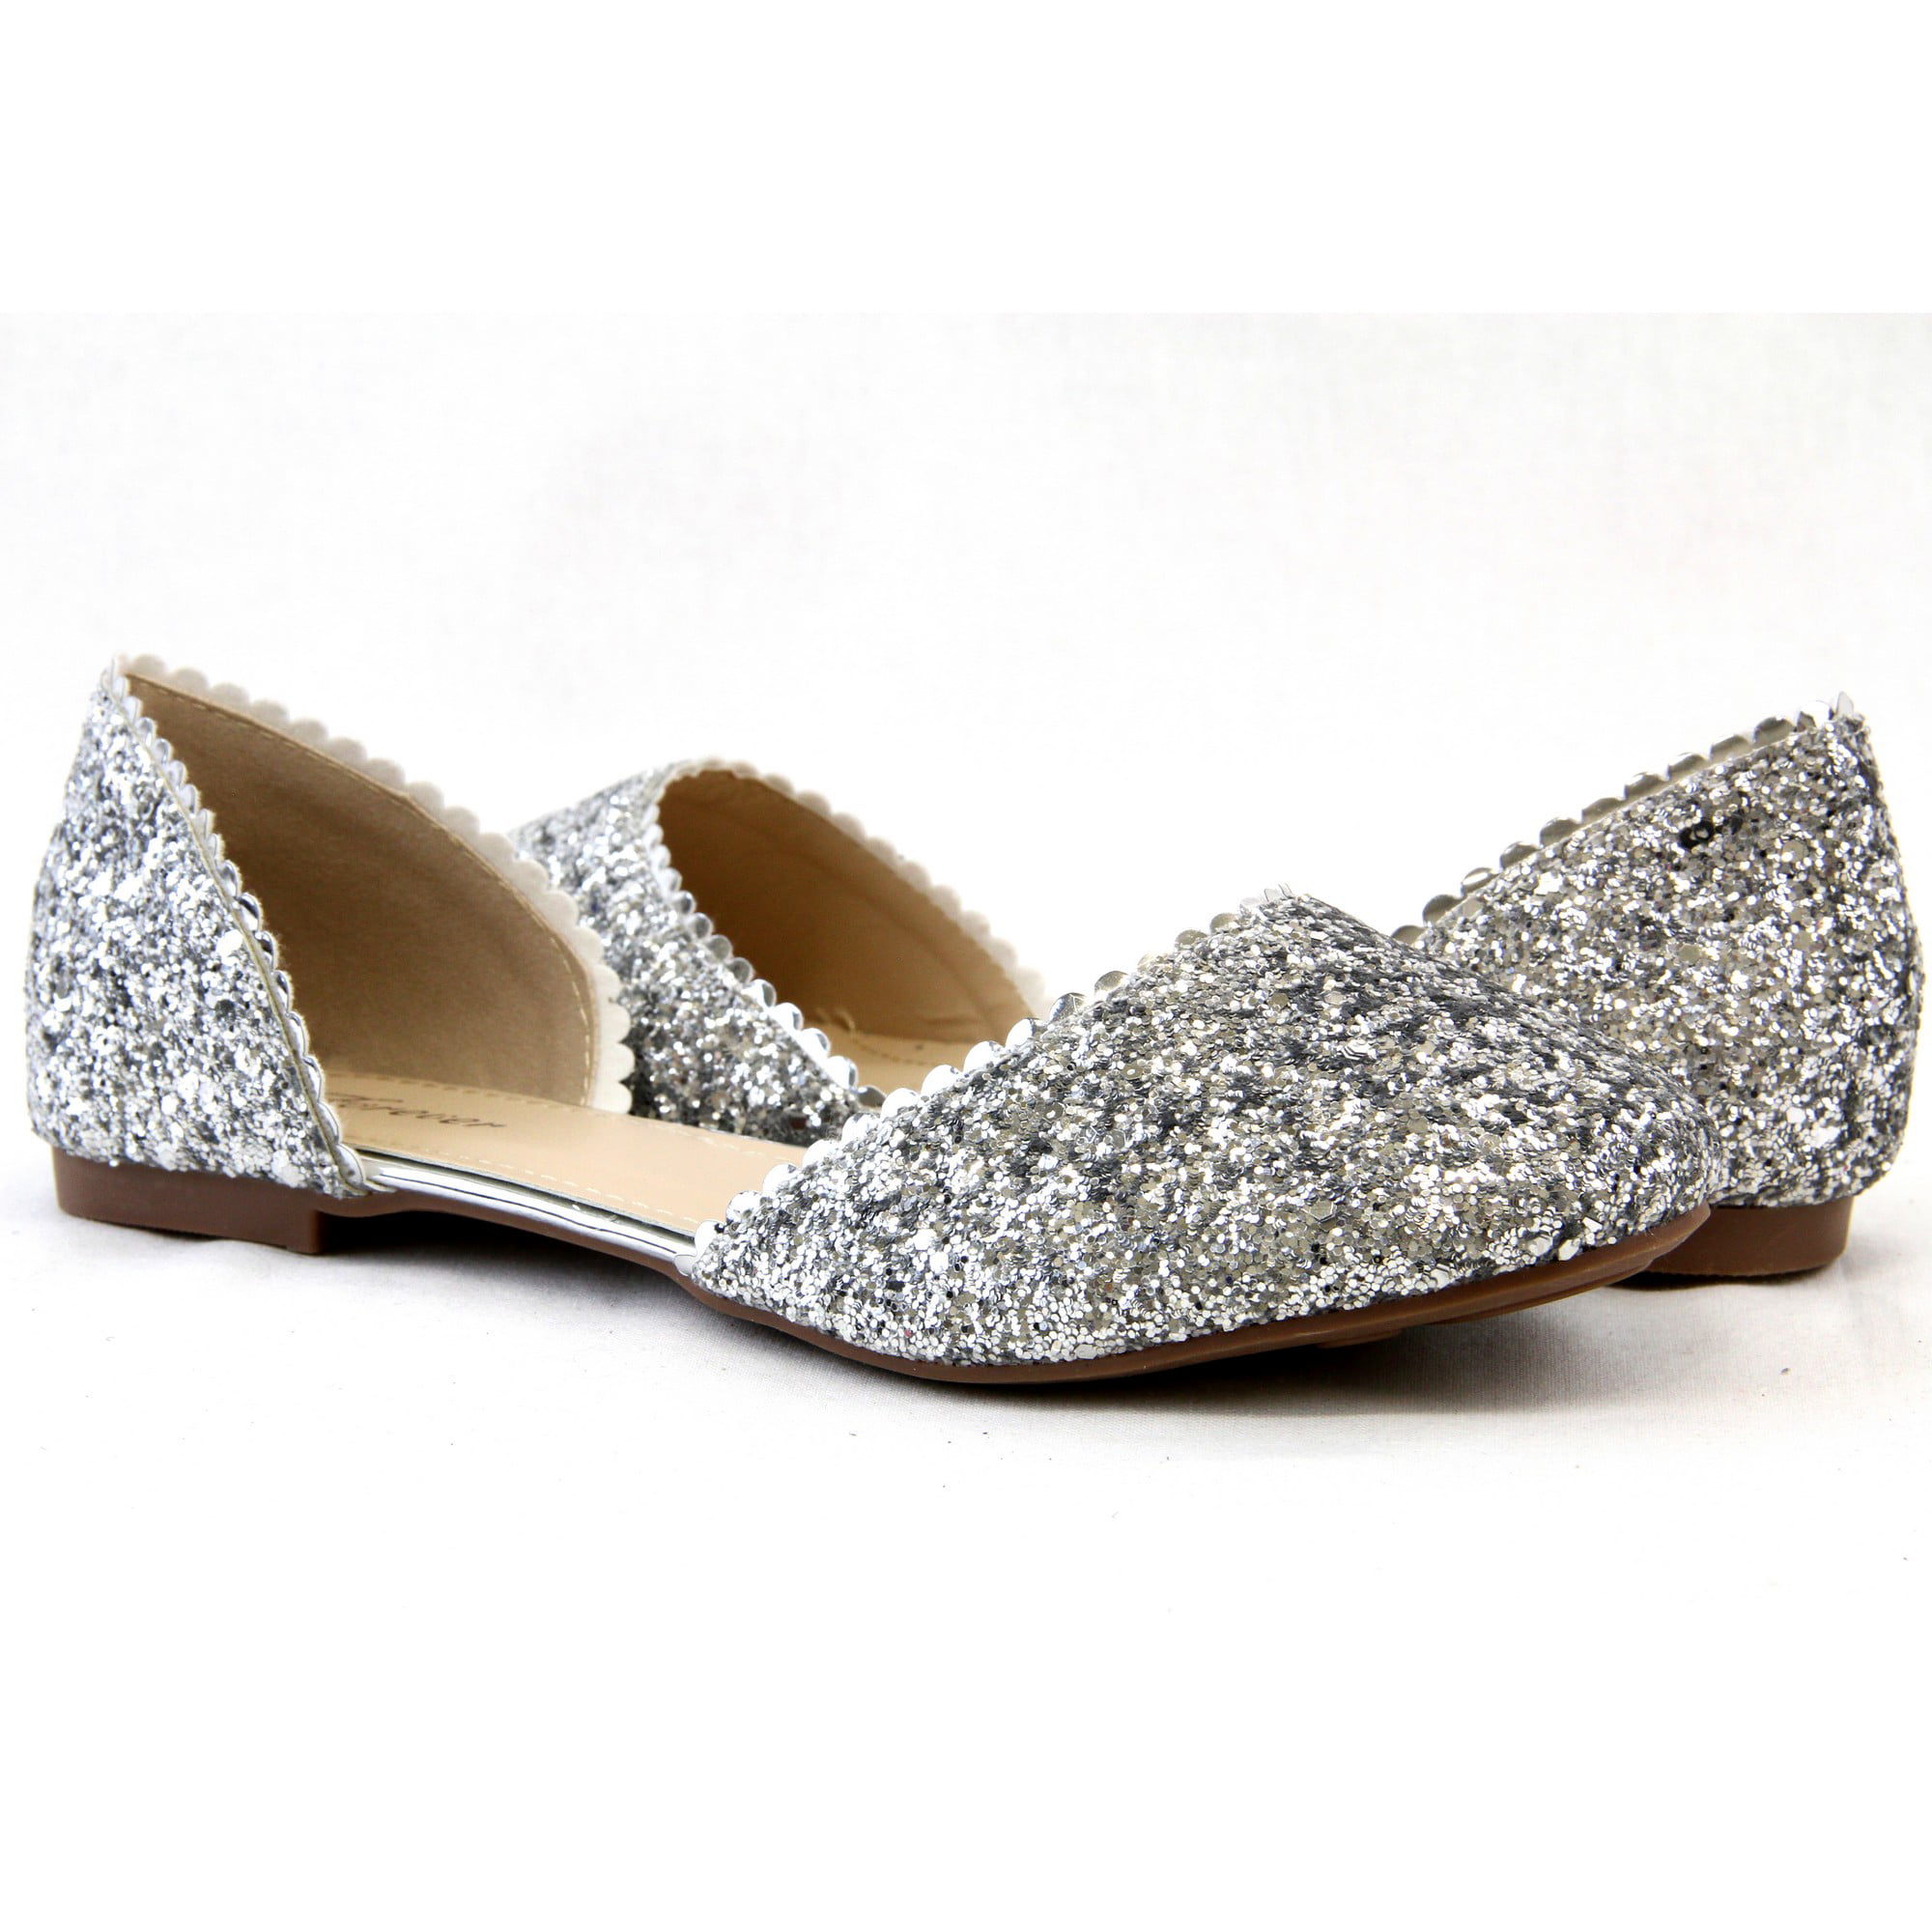 Blind faith specification palm Women Fashion D'orsay Flats Shiny Glitter Shoes Design Rose Gold -  Walmart.com